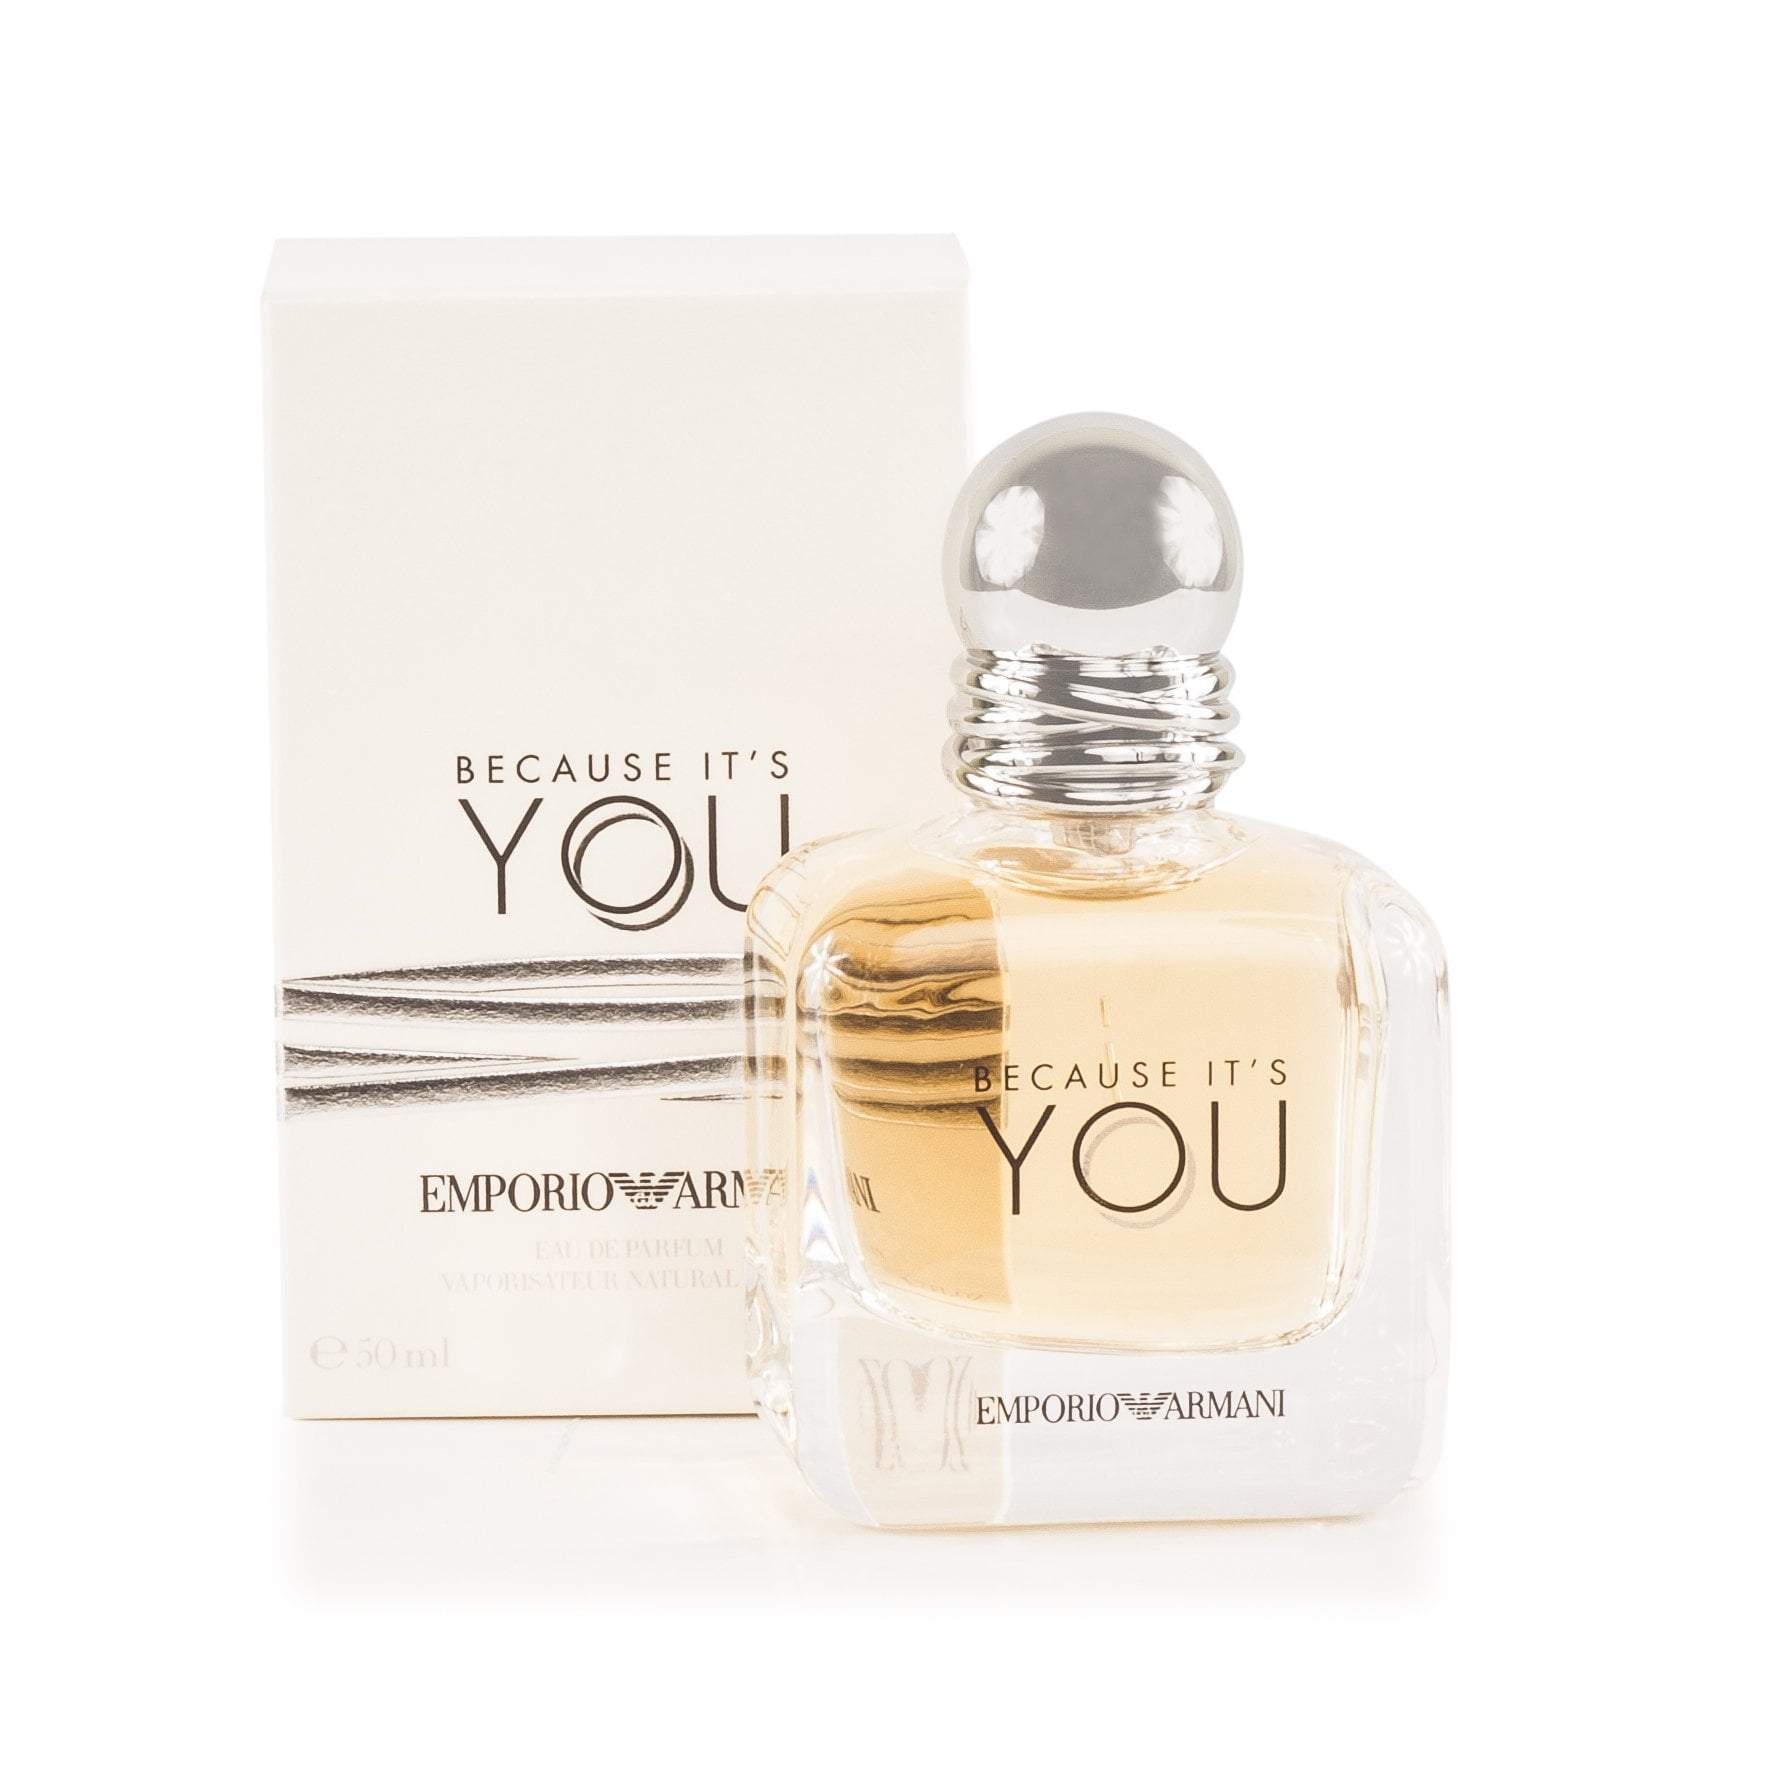 Because It's You Eau de Parfum Spray for Women by Giorgio Armani, Product image 1